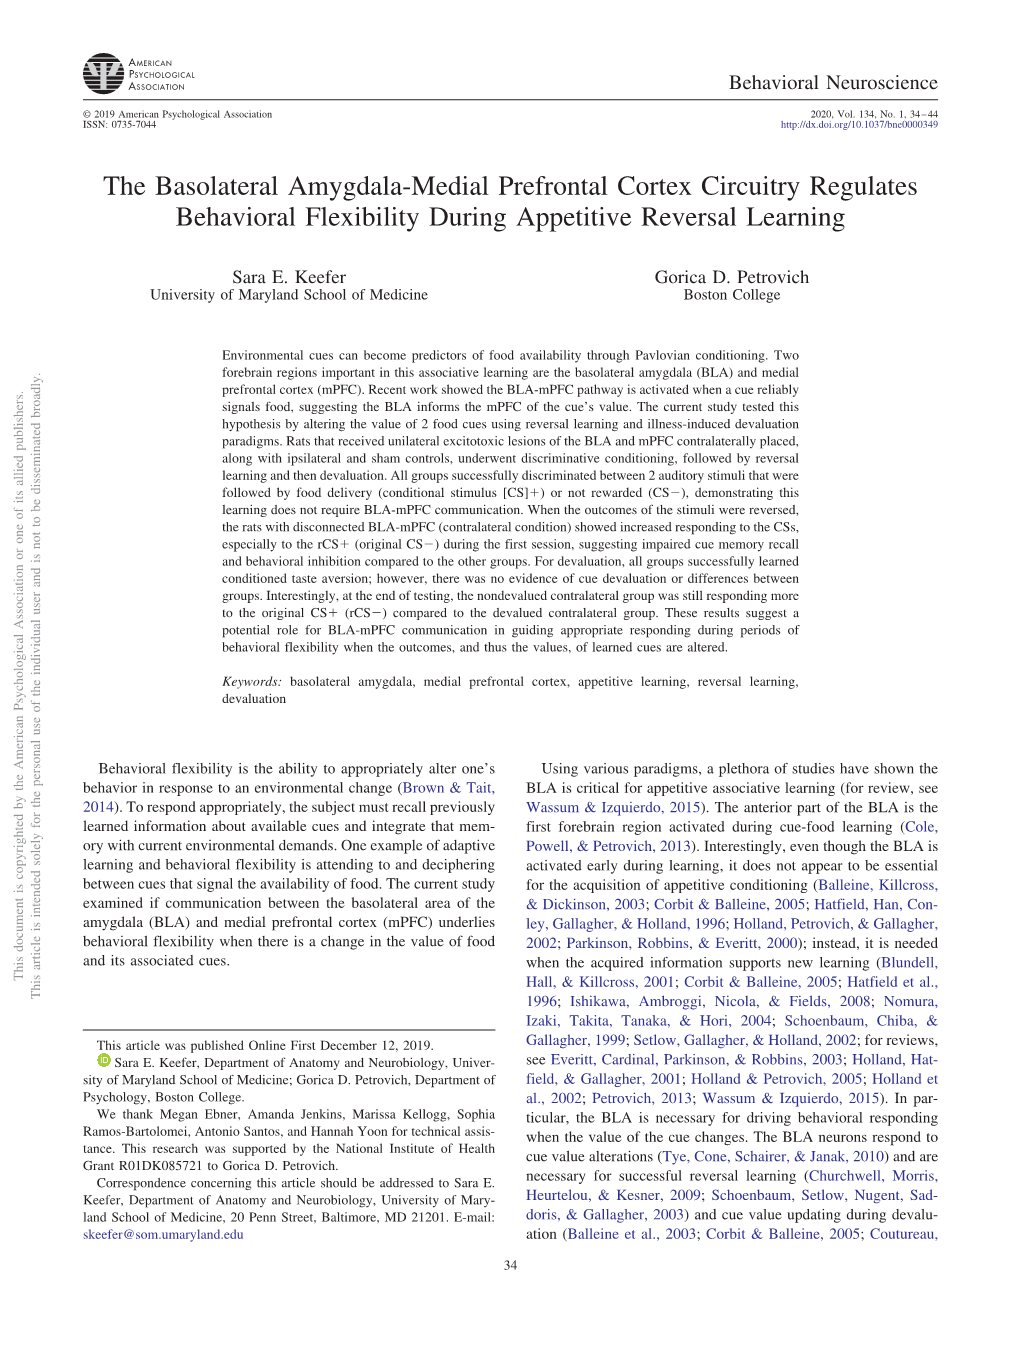 The Basolateral Amygdala-Medial Prefrontal Cortex Circuitry Regulates Behavioral Flexibility During Appetitive Reversal Learning